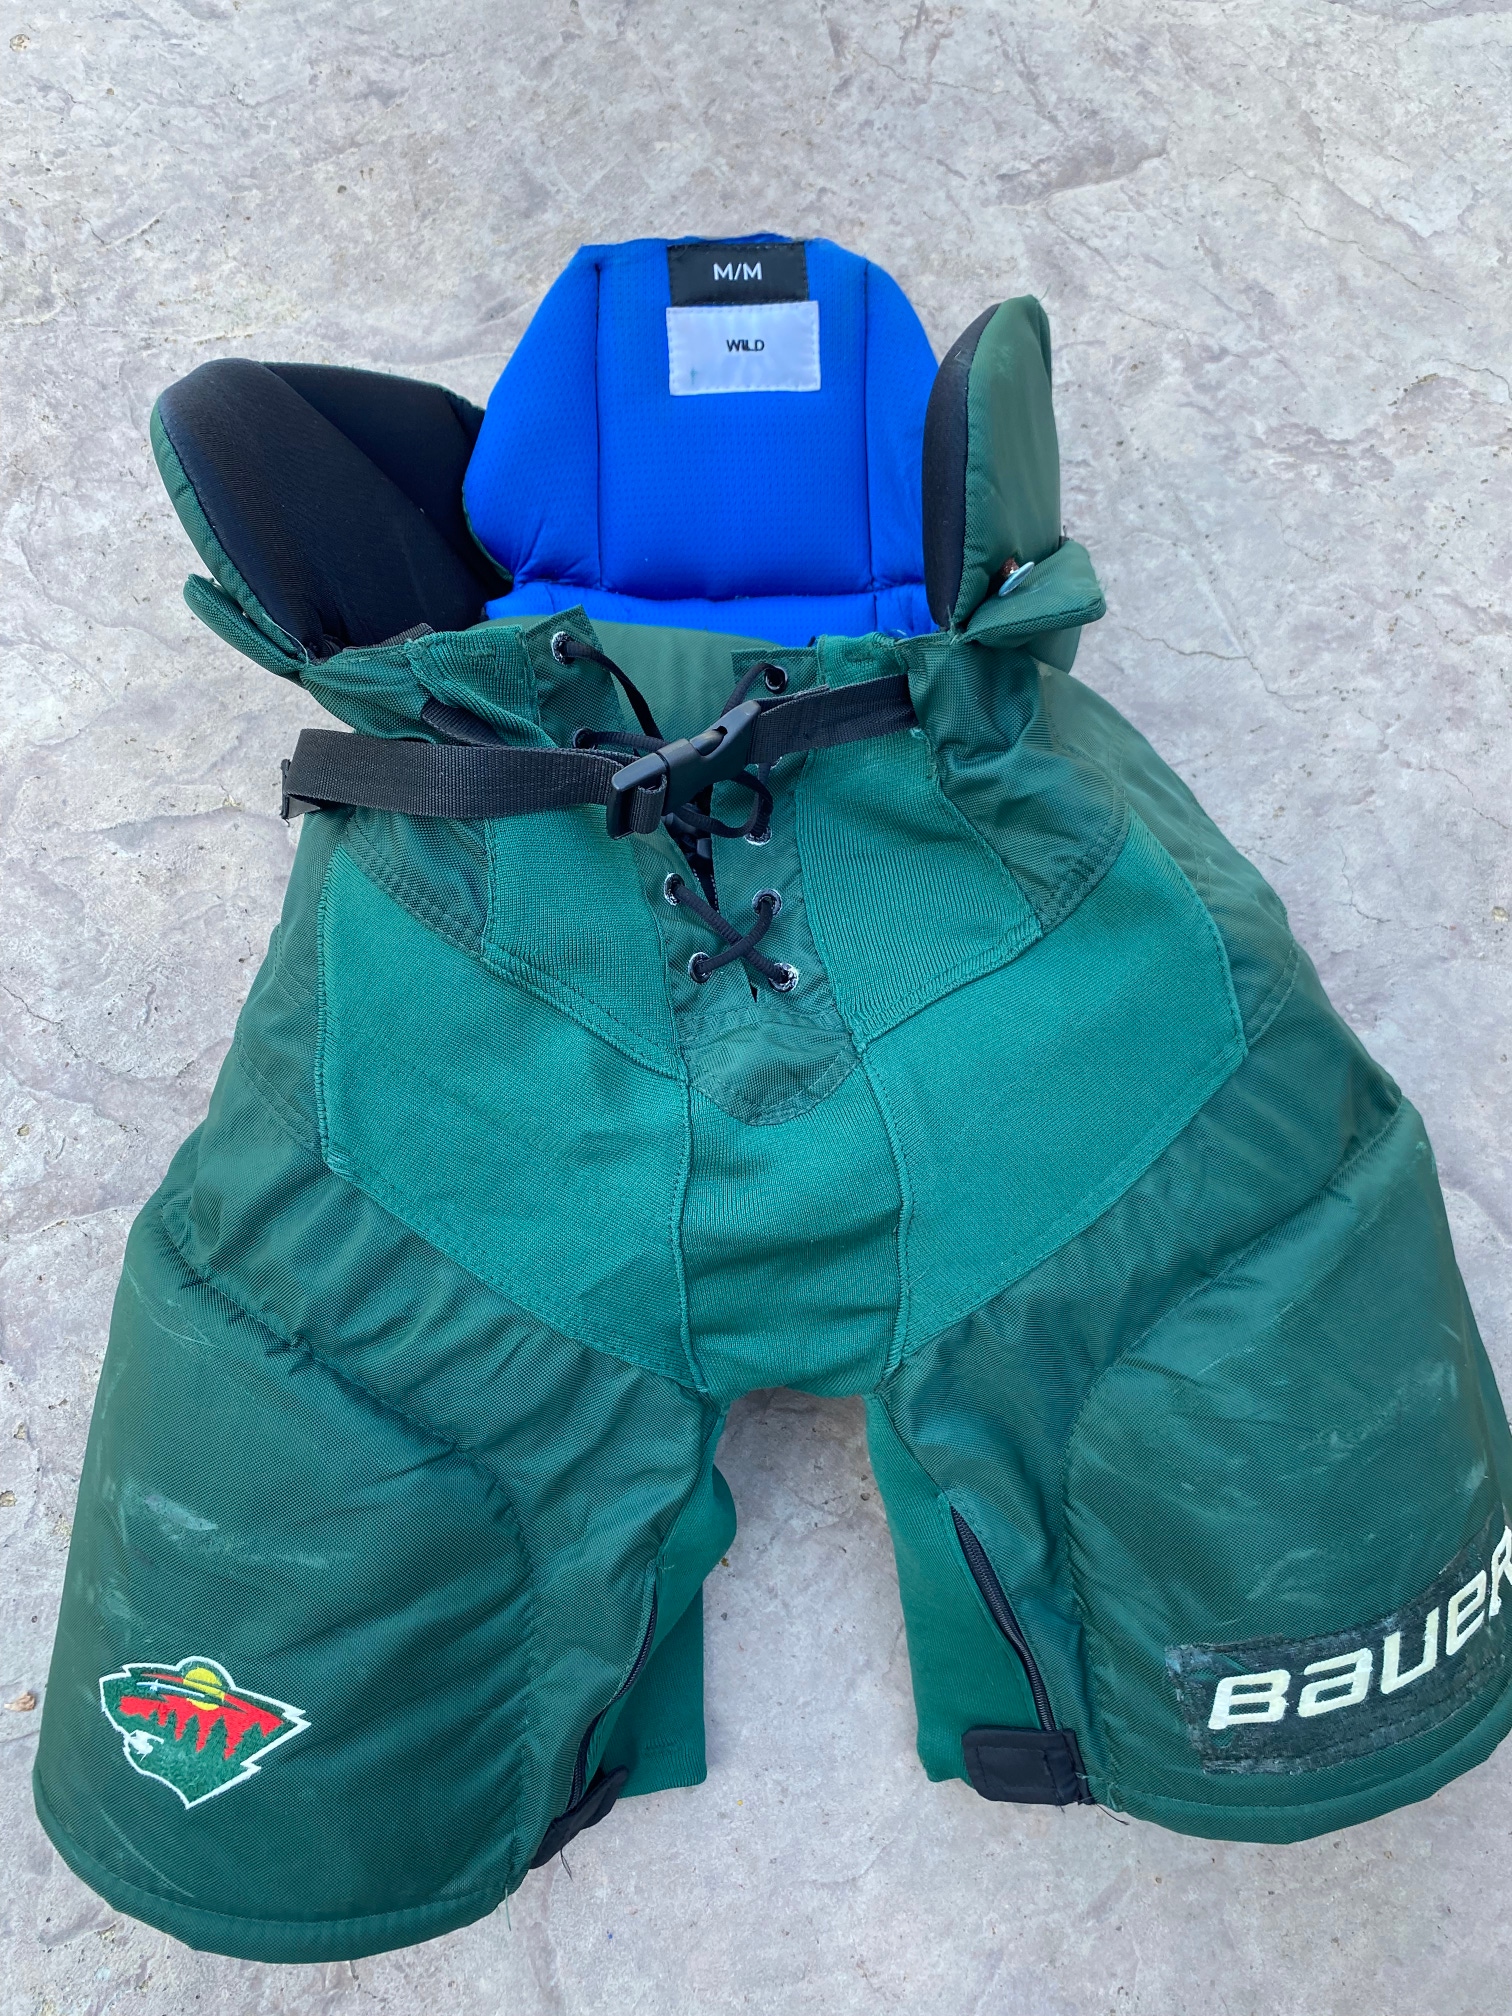 Bauer Nexus Pro Stock Hockey Pants Medium Minnesota Wild Green 3420